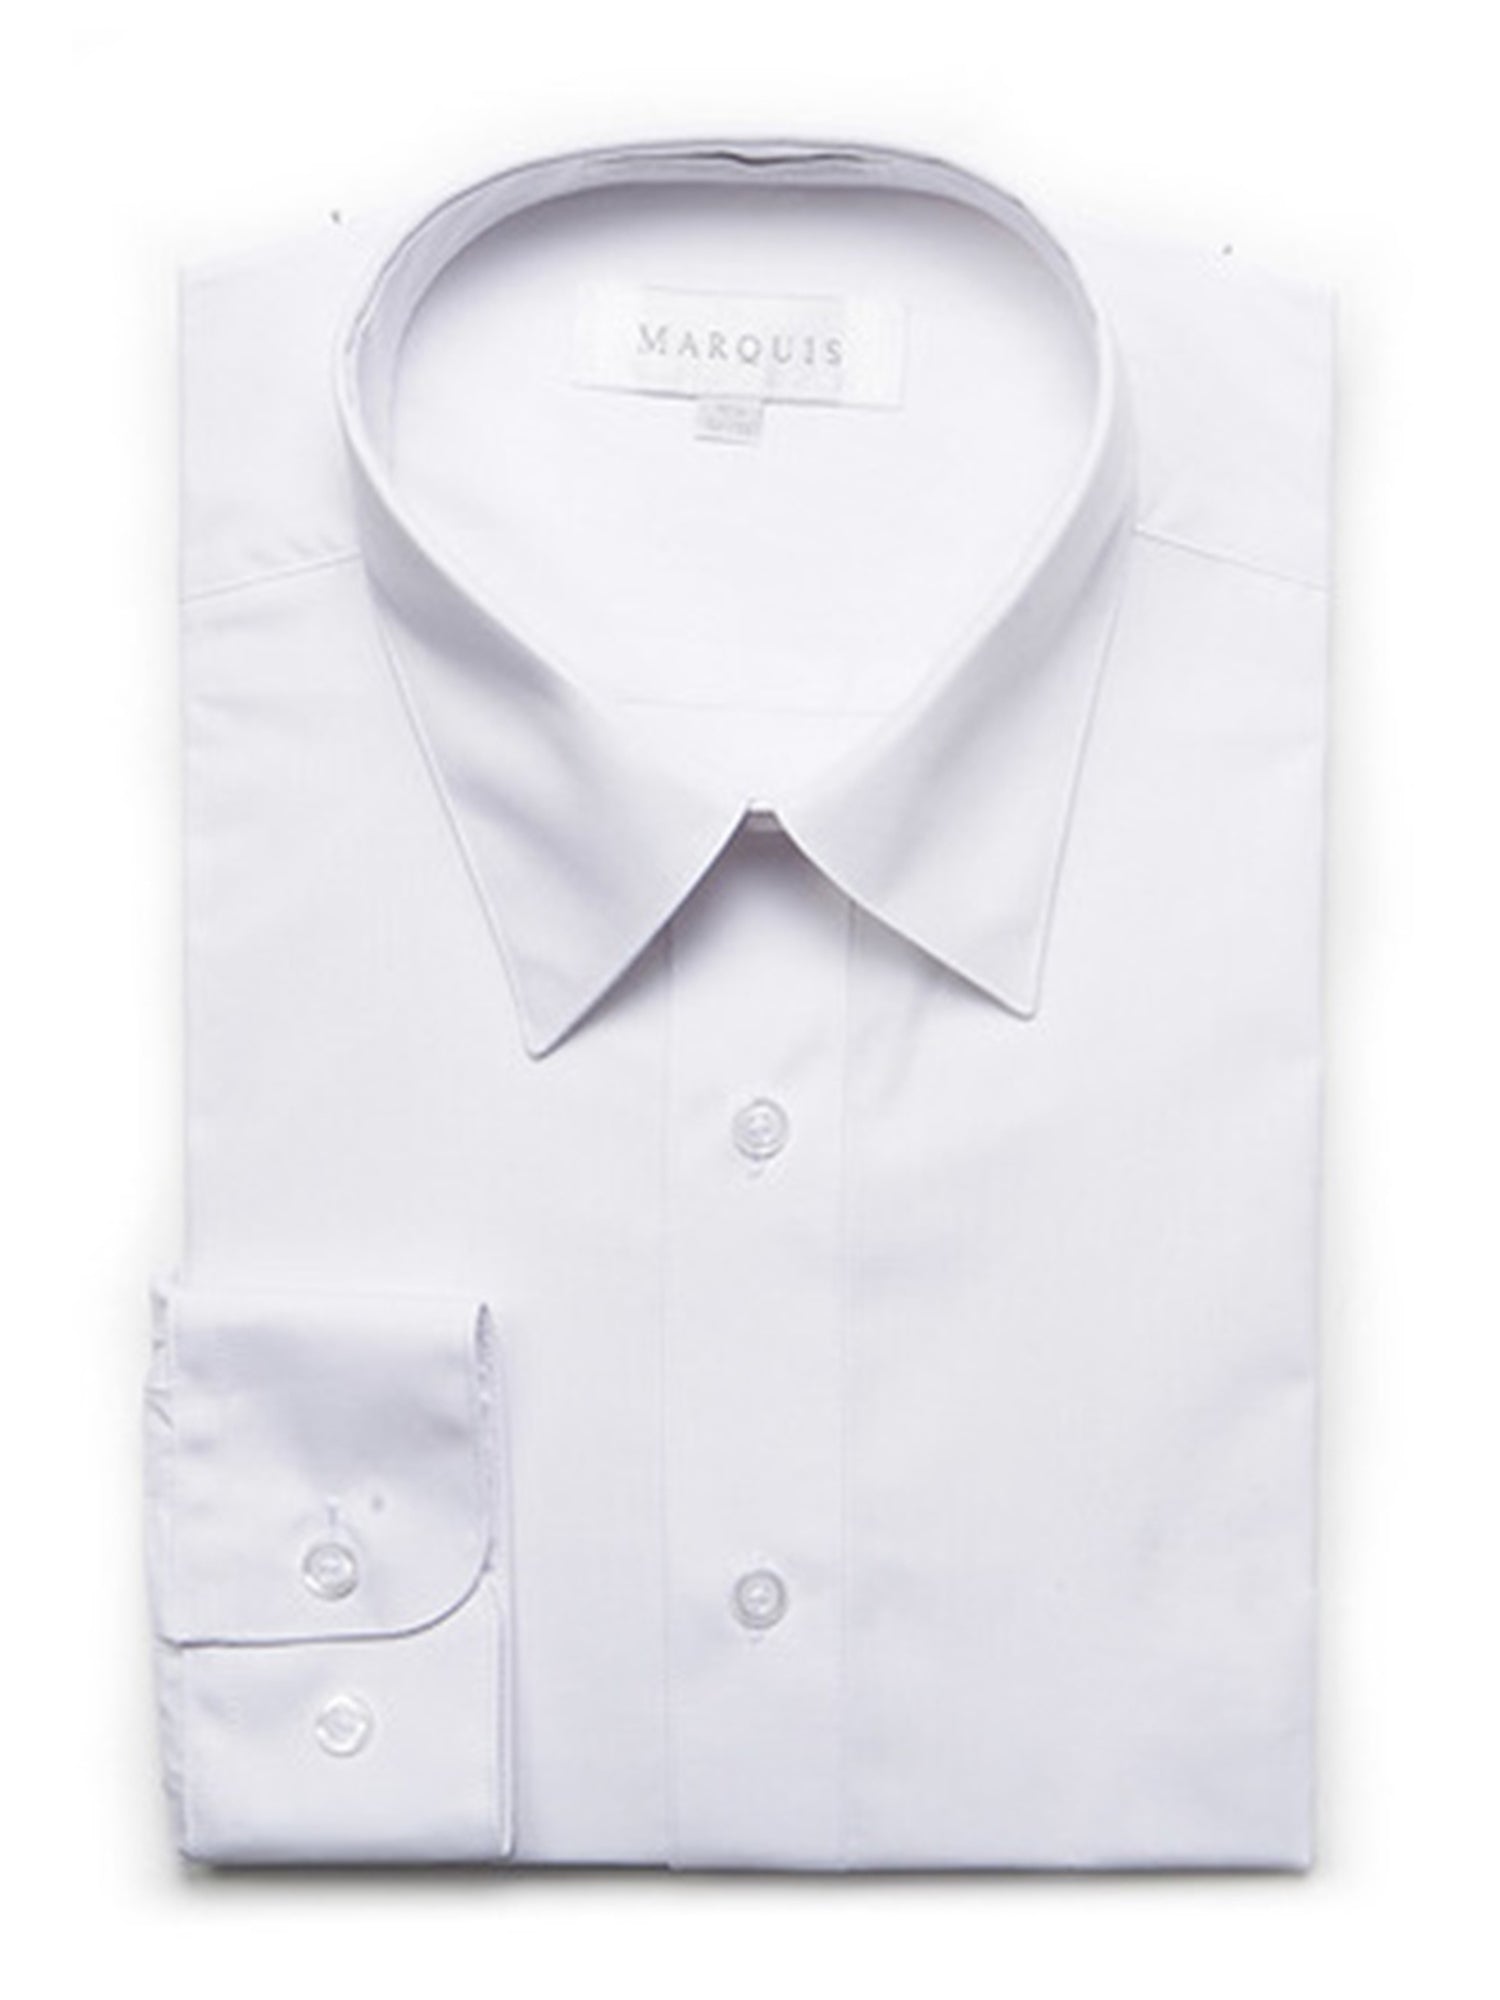 Marquis Men's Long Sleeve Slim Fit Dress Shirt Slim Fit Dress Shirt Marquis White 14.5 Neck 32/33 Sleeve 